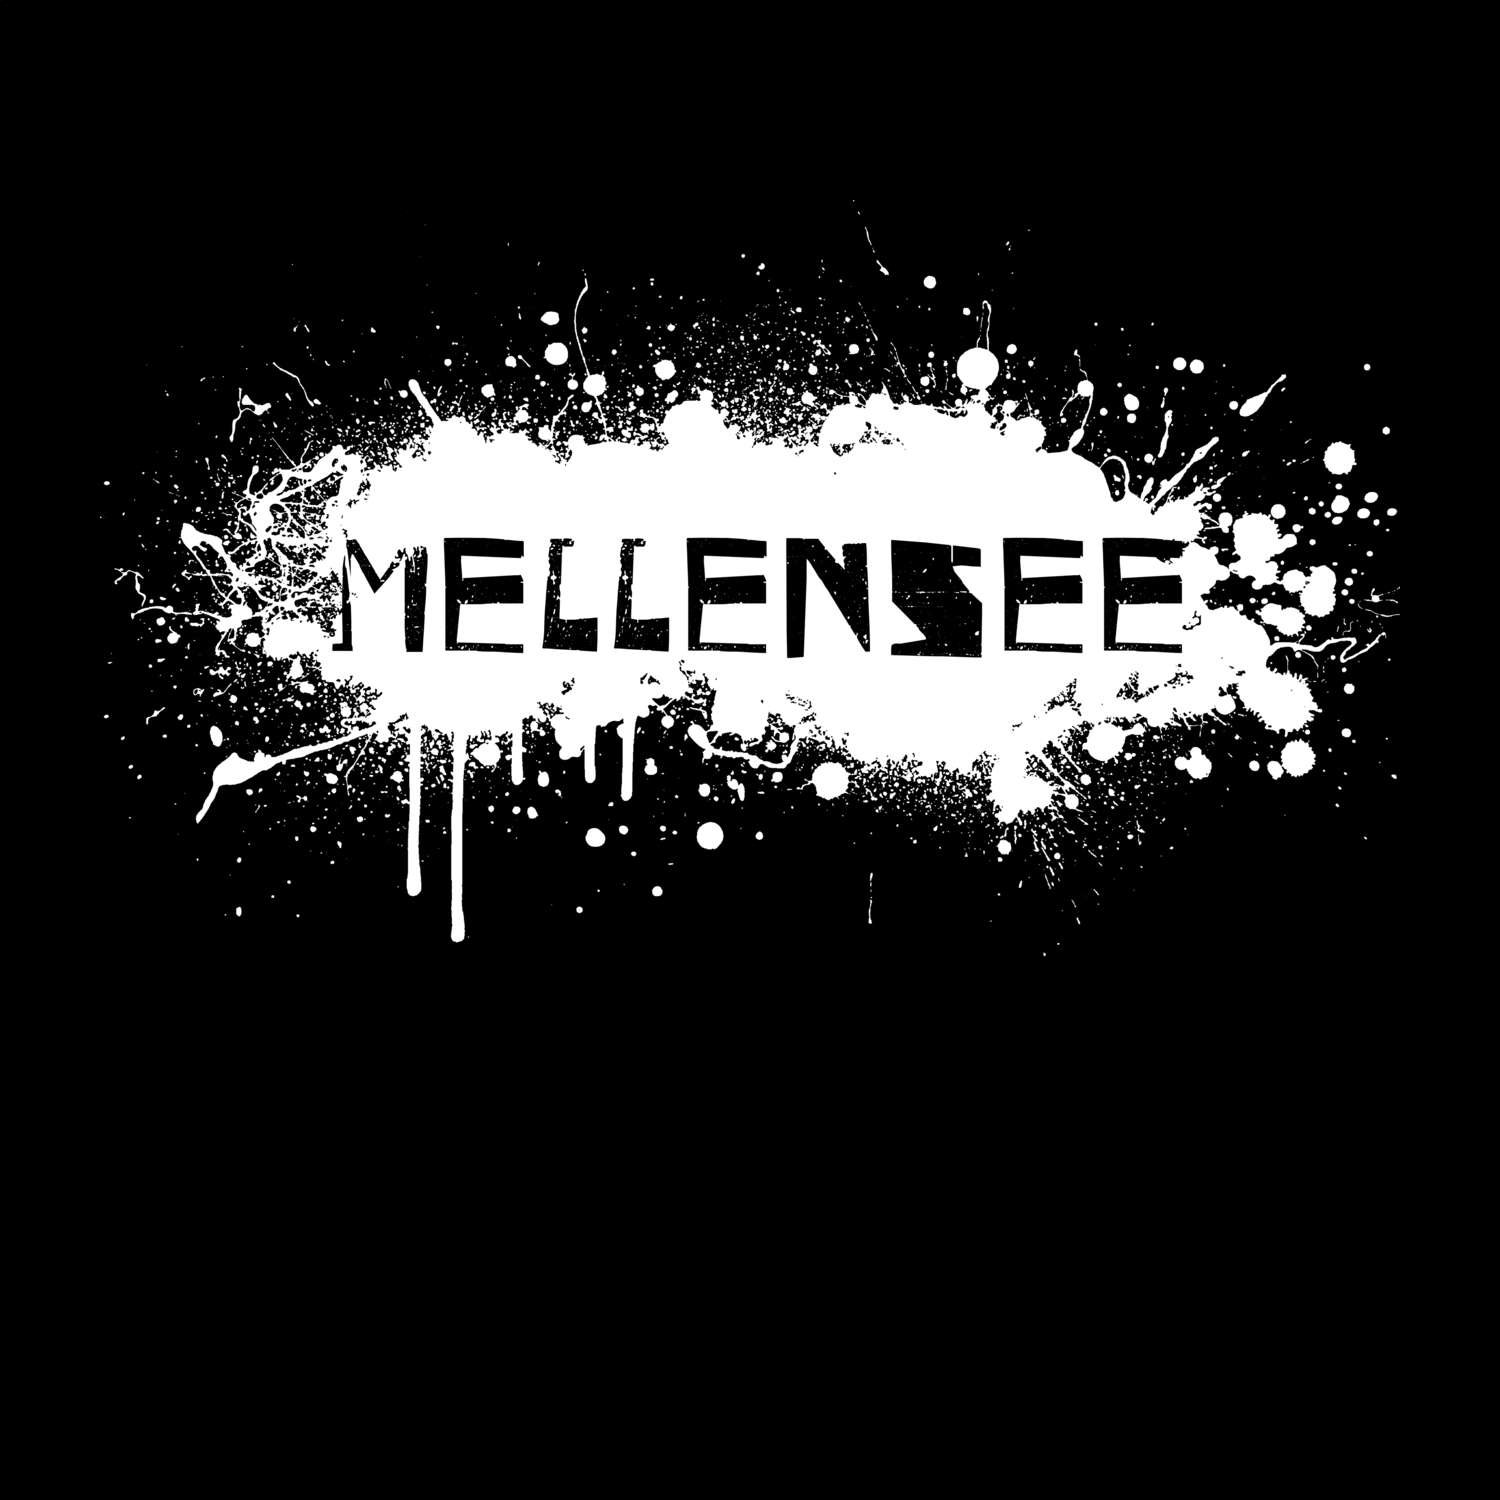 Mellensee T-Shirt »Paint Splash Punk«